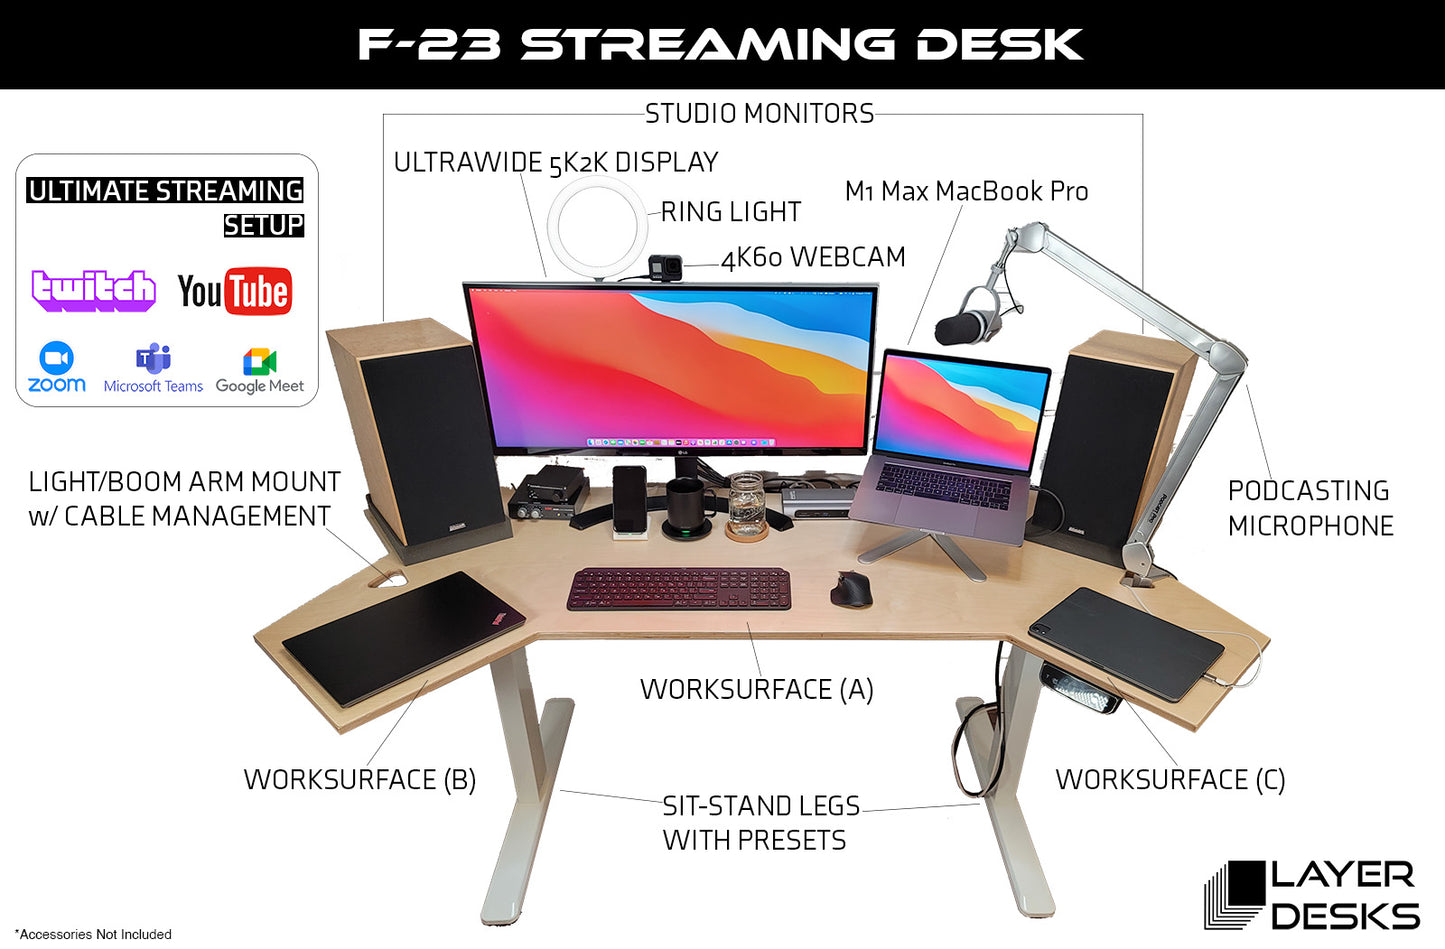 F-23 Streaming Desk